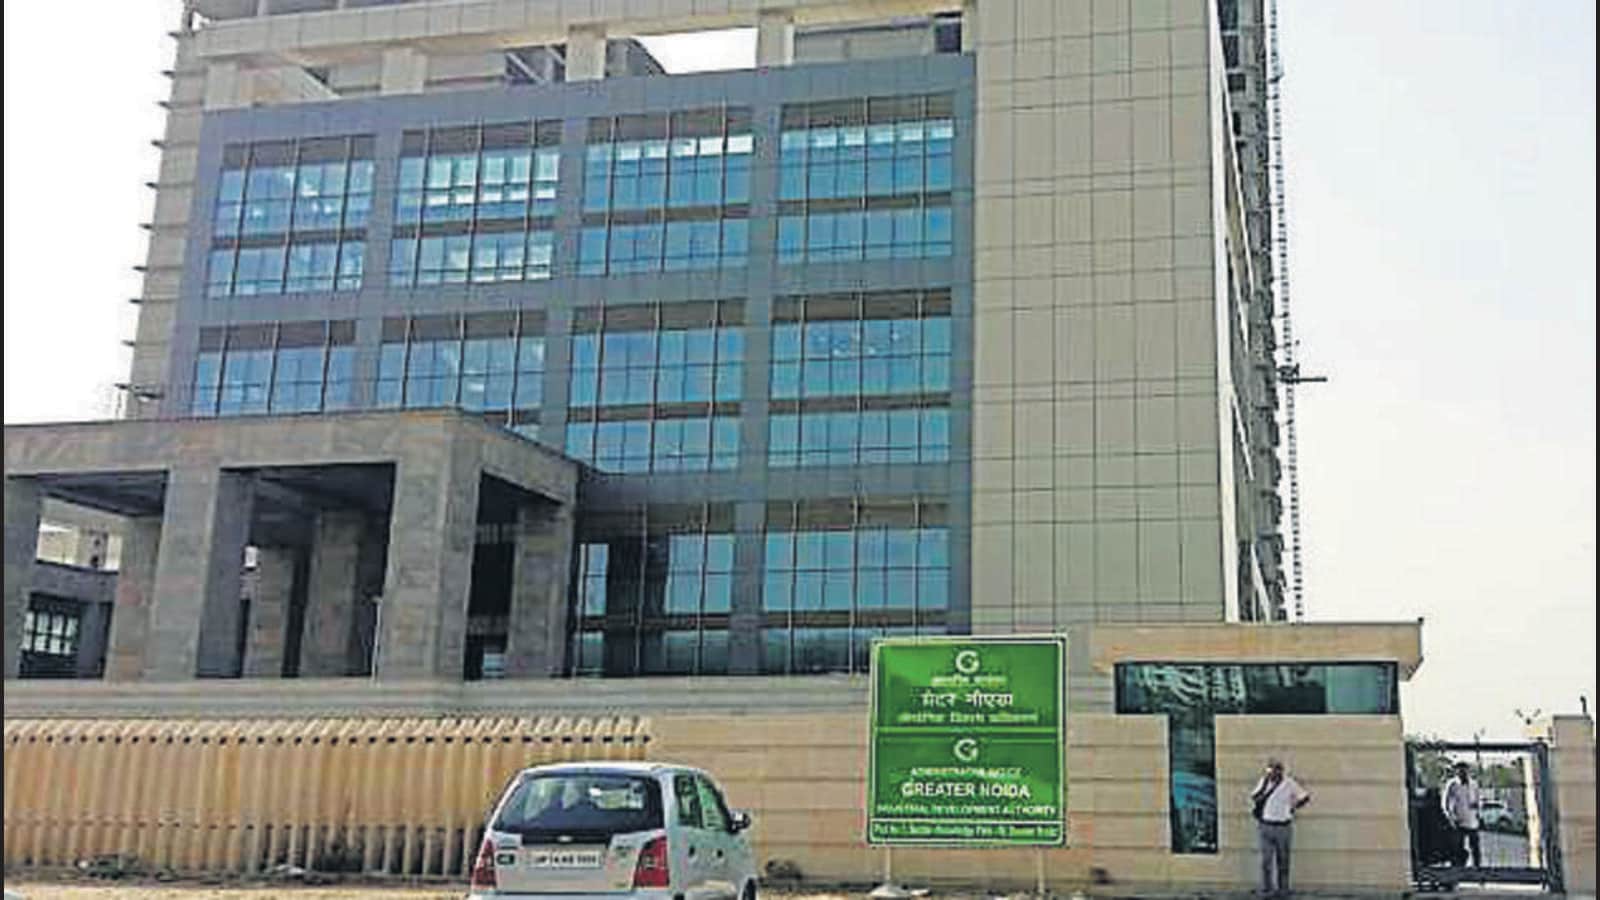 Address deficiencies in villa or face action, consumer forum tells Greater  Noida - Hindustan Times